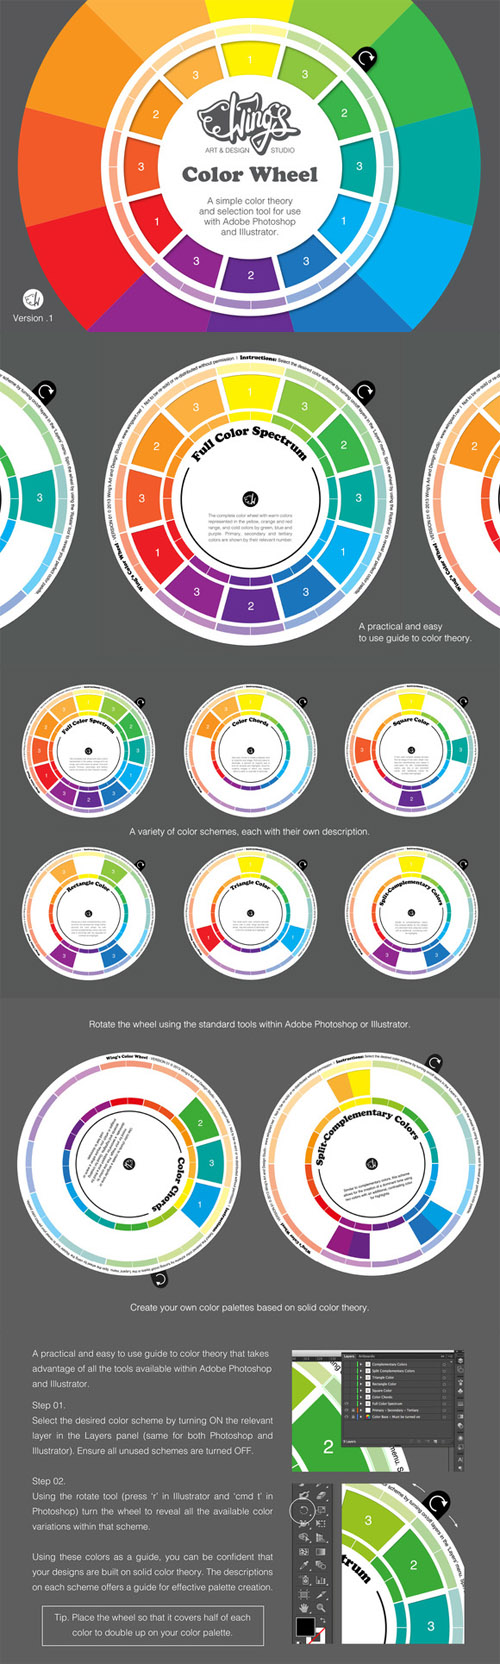 CM - Wing's Color Wheel - Design Tool 17181